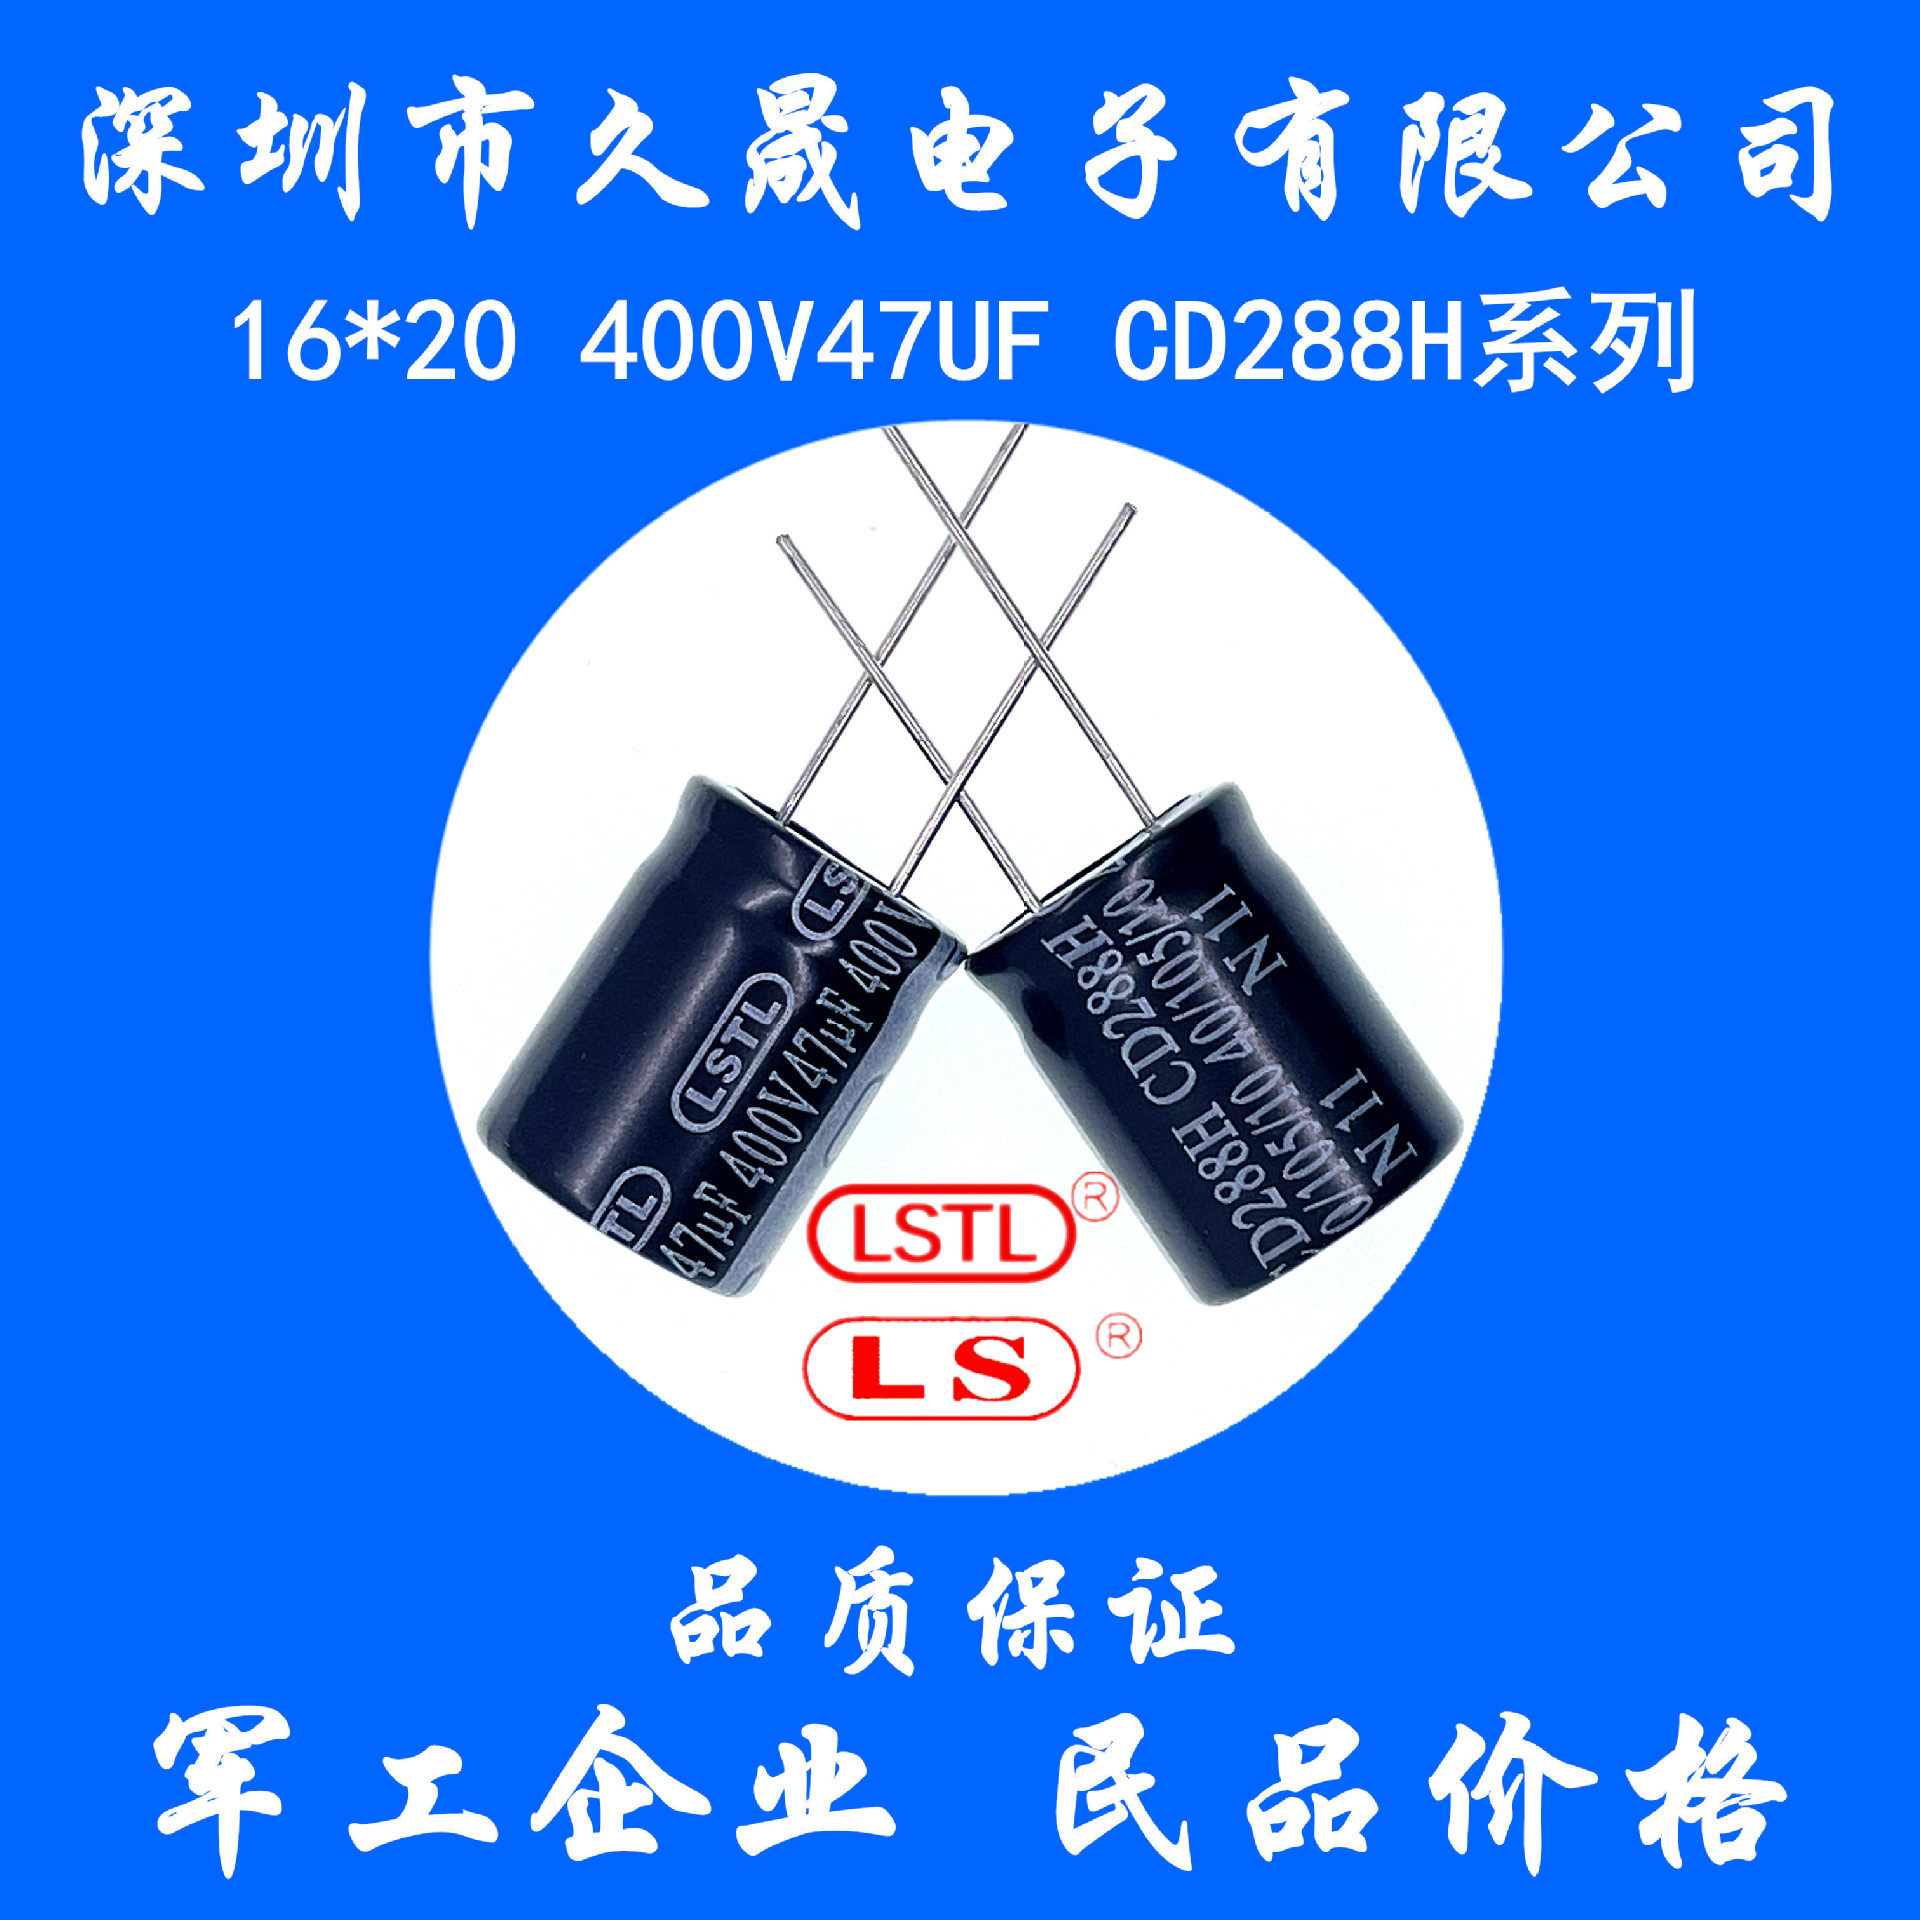 插件 铝电解电容 LSTL 16x20 400v47uf400V 高频 105°长寿命 LED